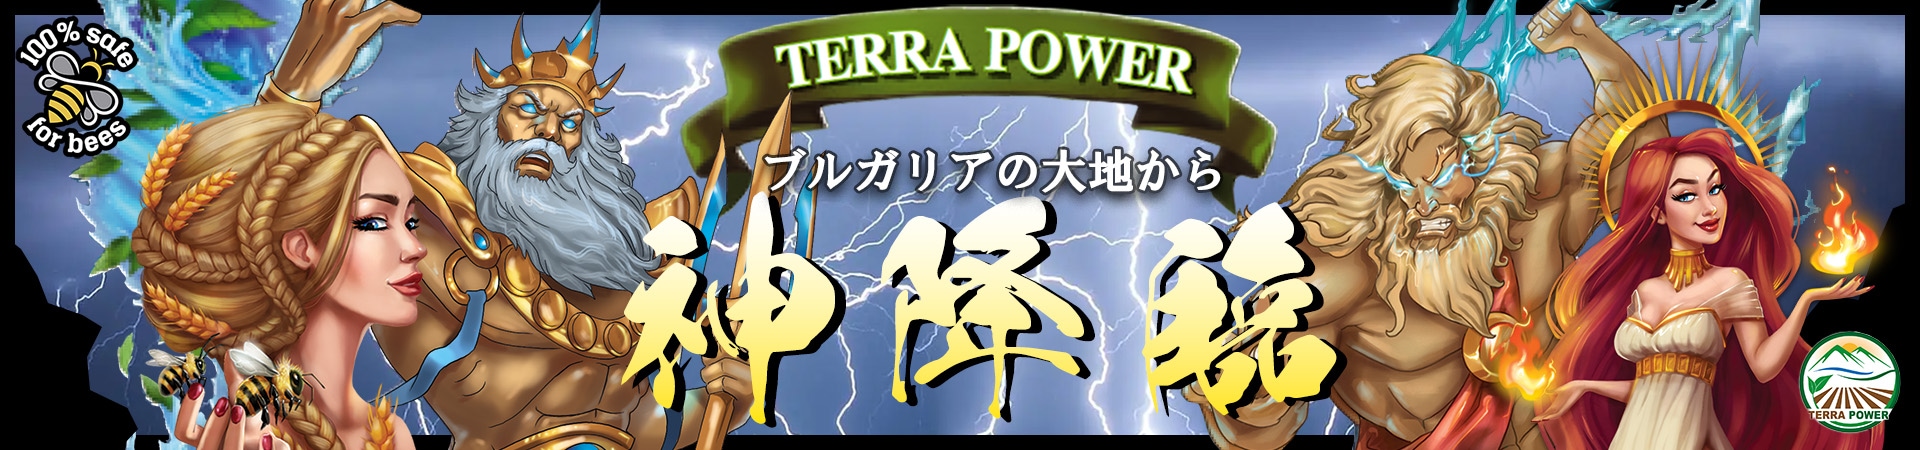 TERRA POWER